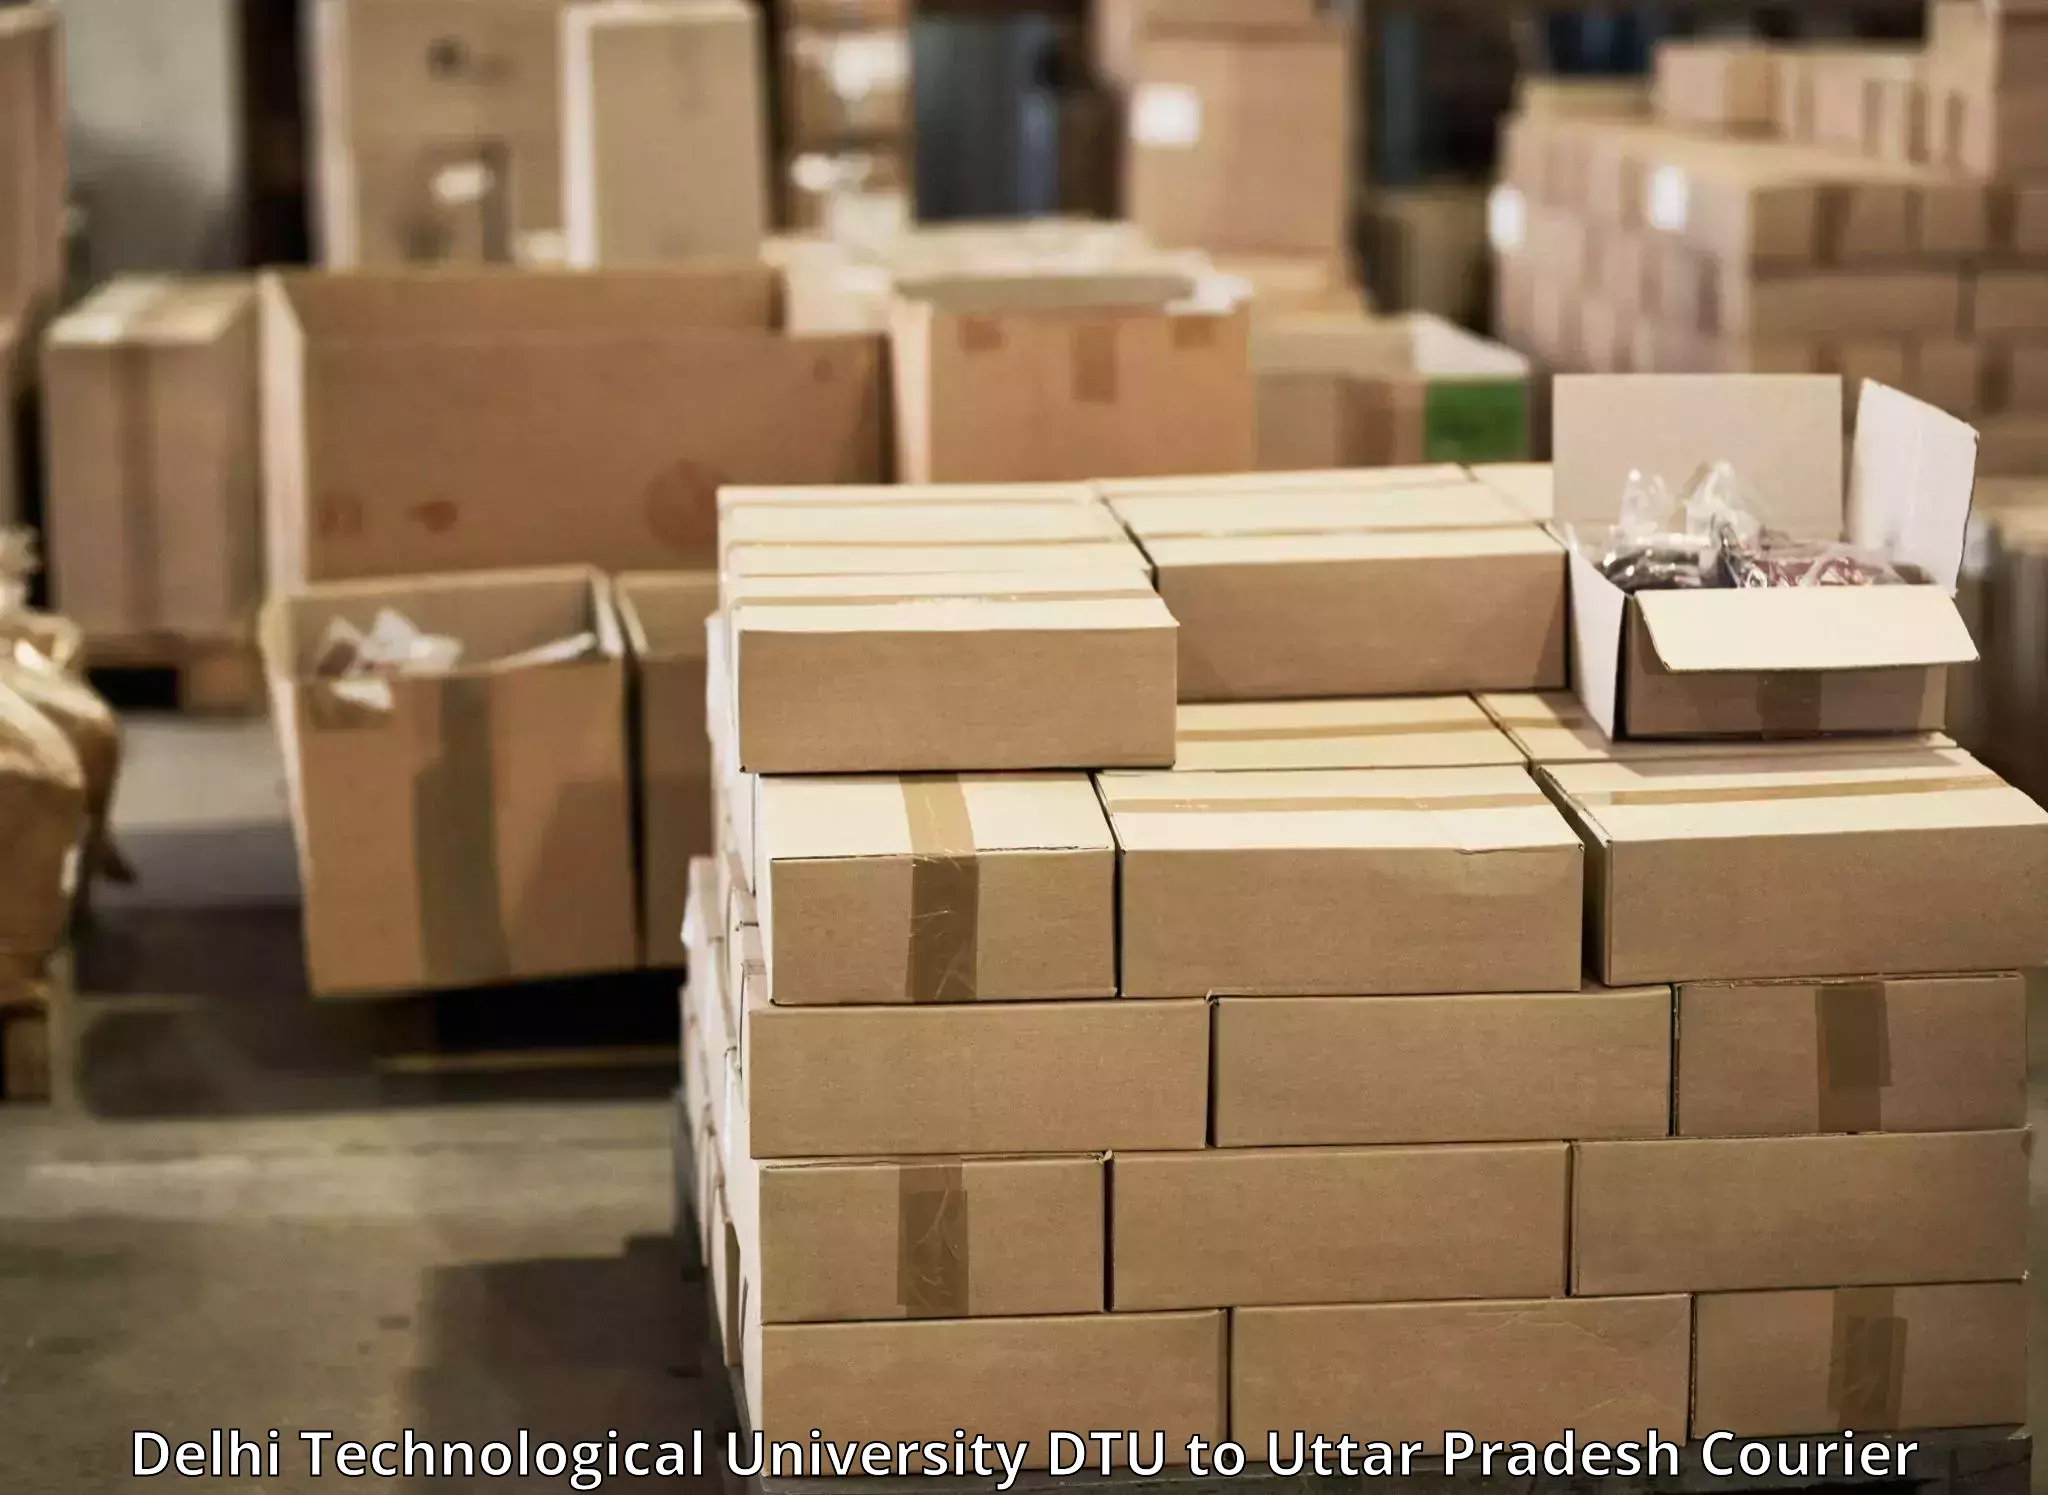 High-capacity parcel service Delhi Technological University DTU to Nautanwa